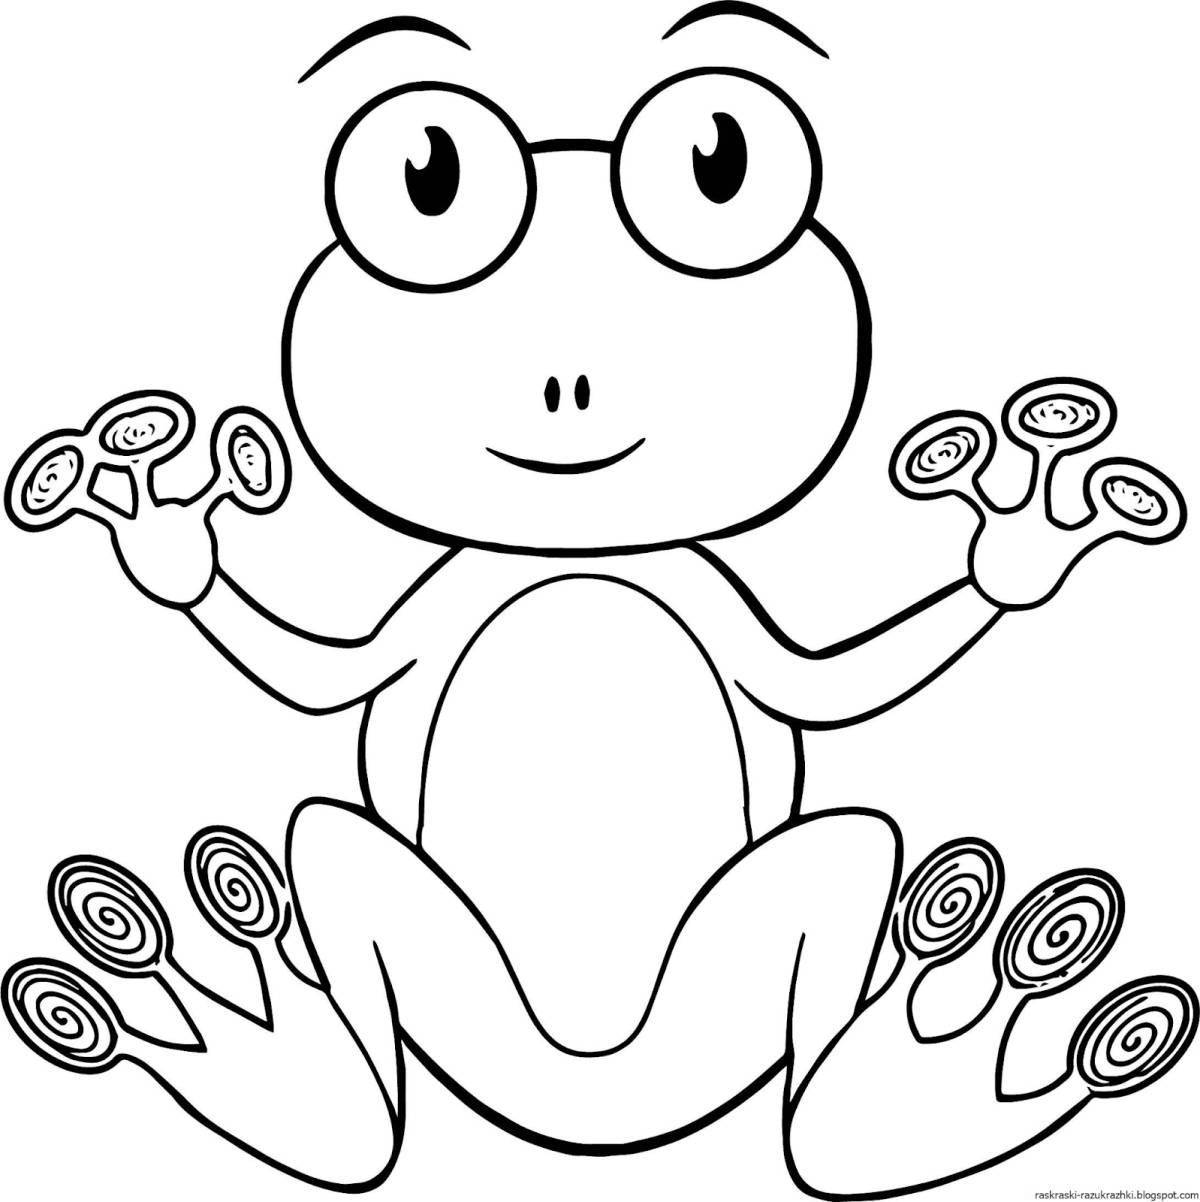 Coloring book bright traveler frog for kids